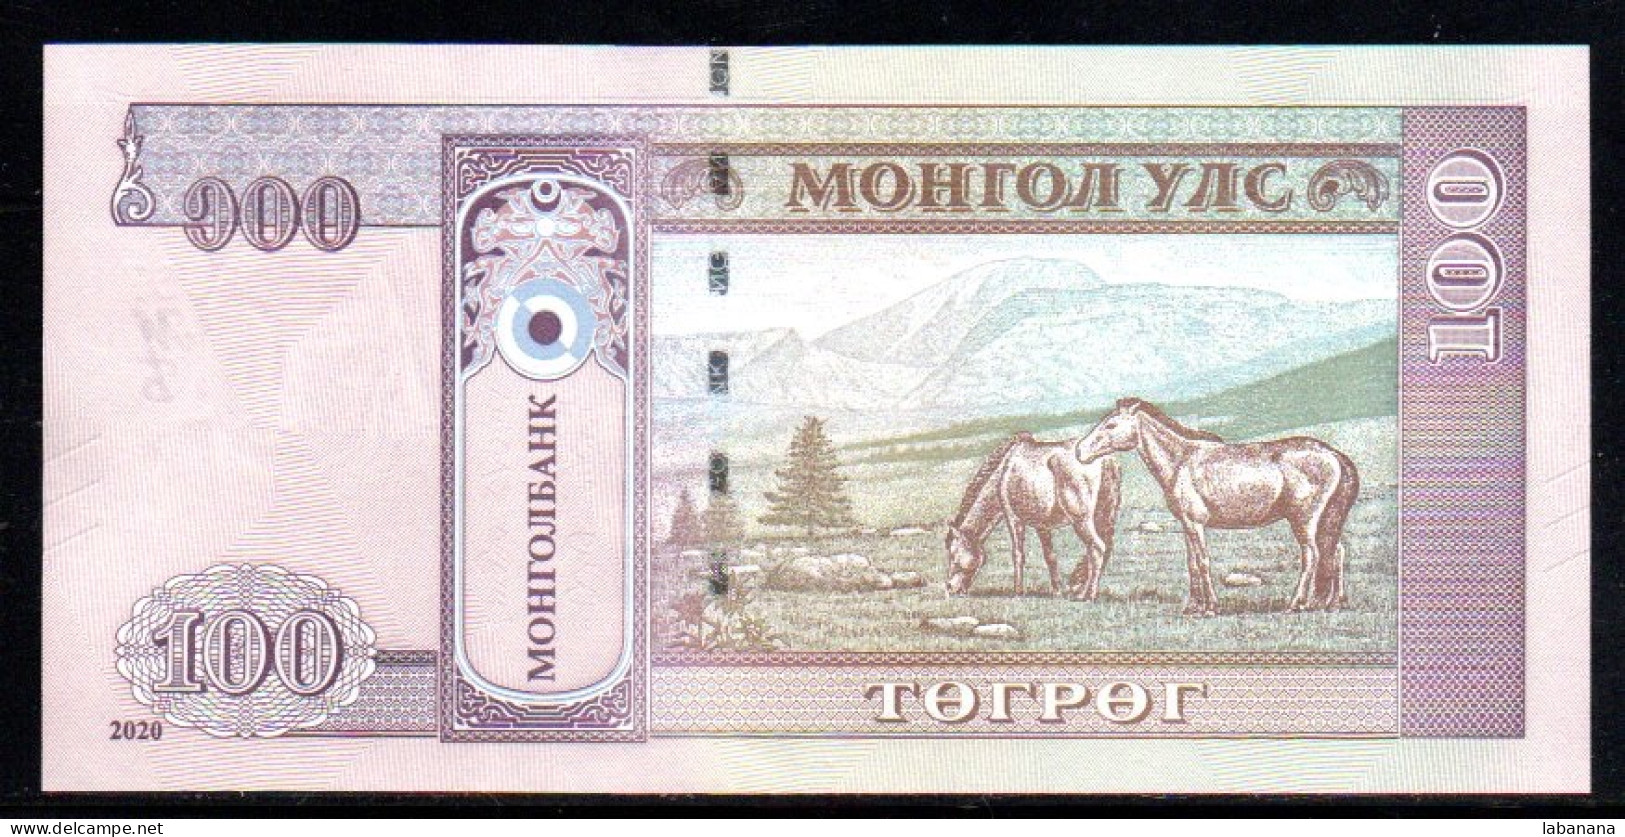 688-Mongolie 100 Tugrik 2020 AT110 Neuf/unc - Mongolia